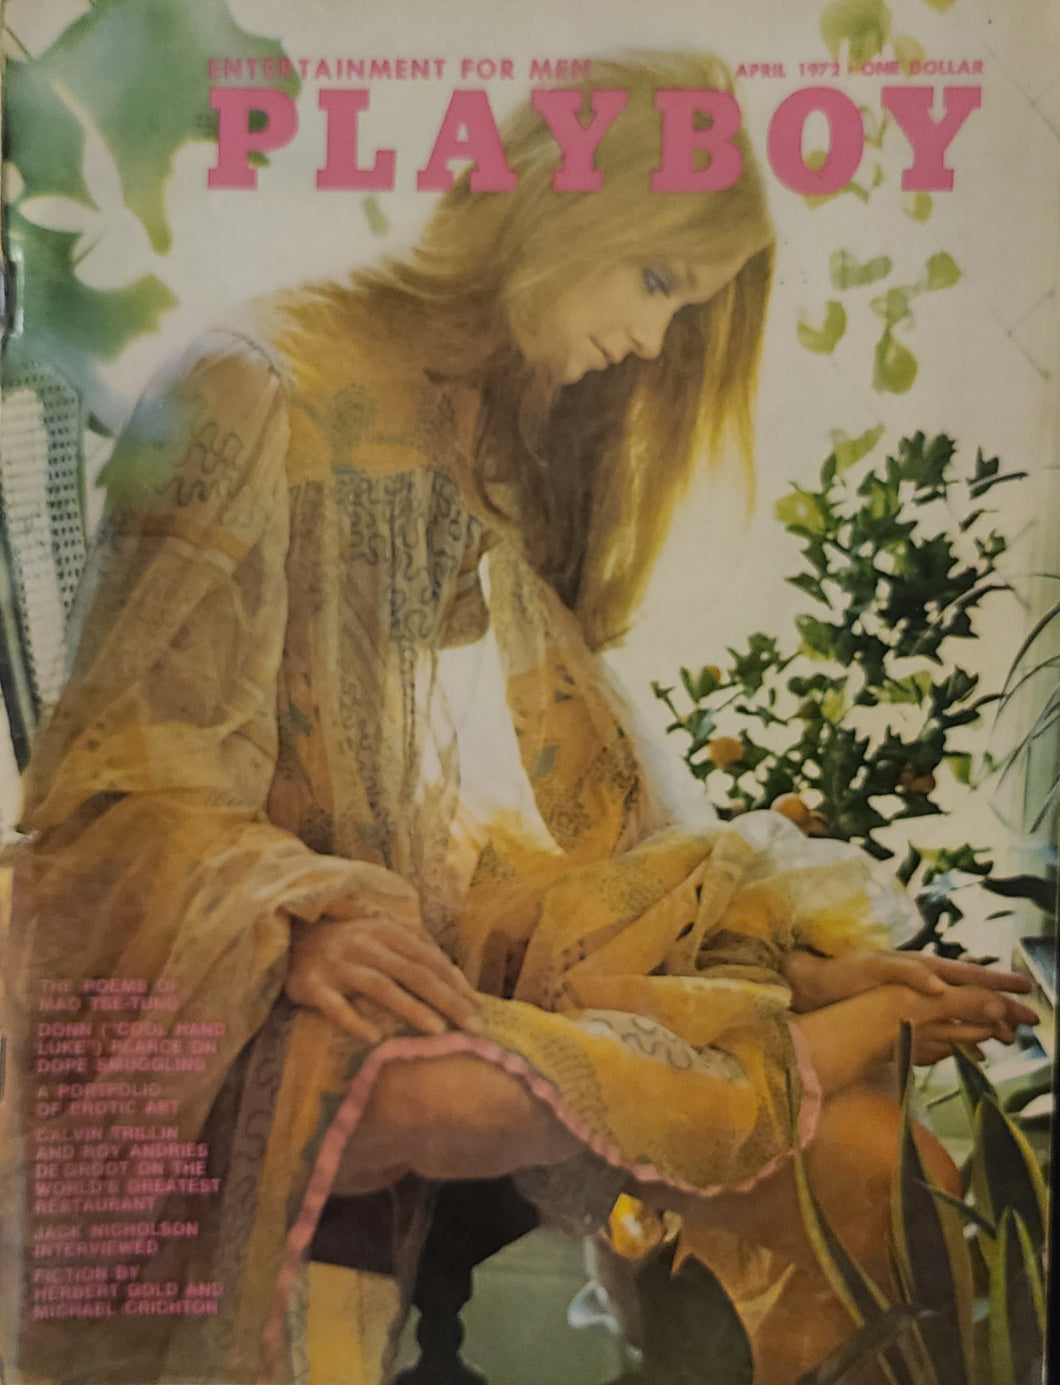 Playboy - April 1972